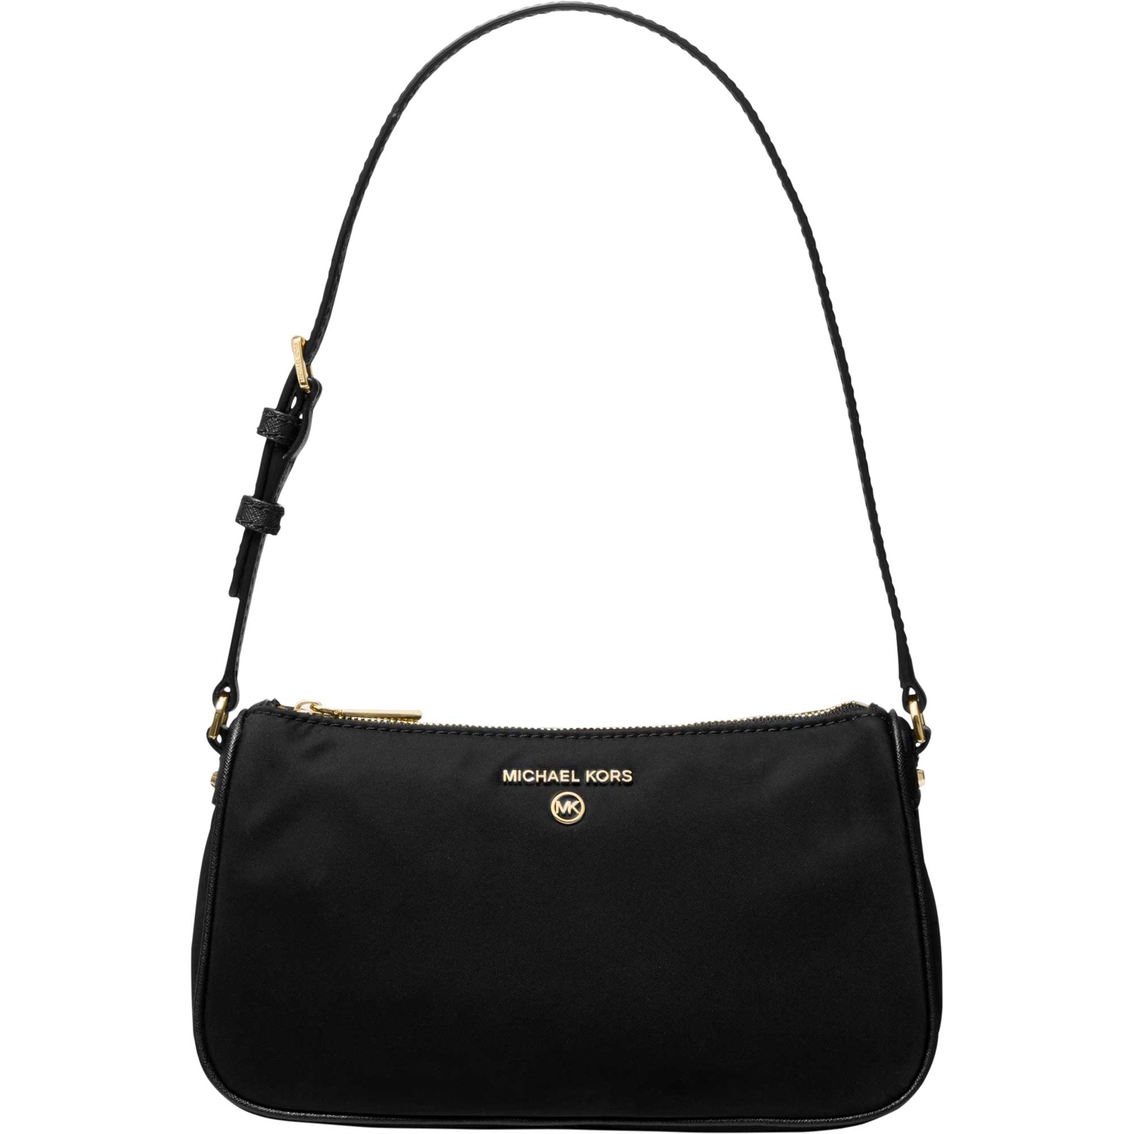 kors michael kors accessories for handbags